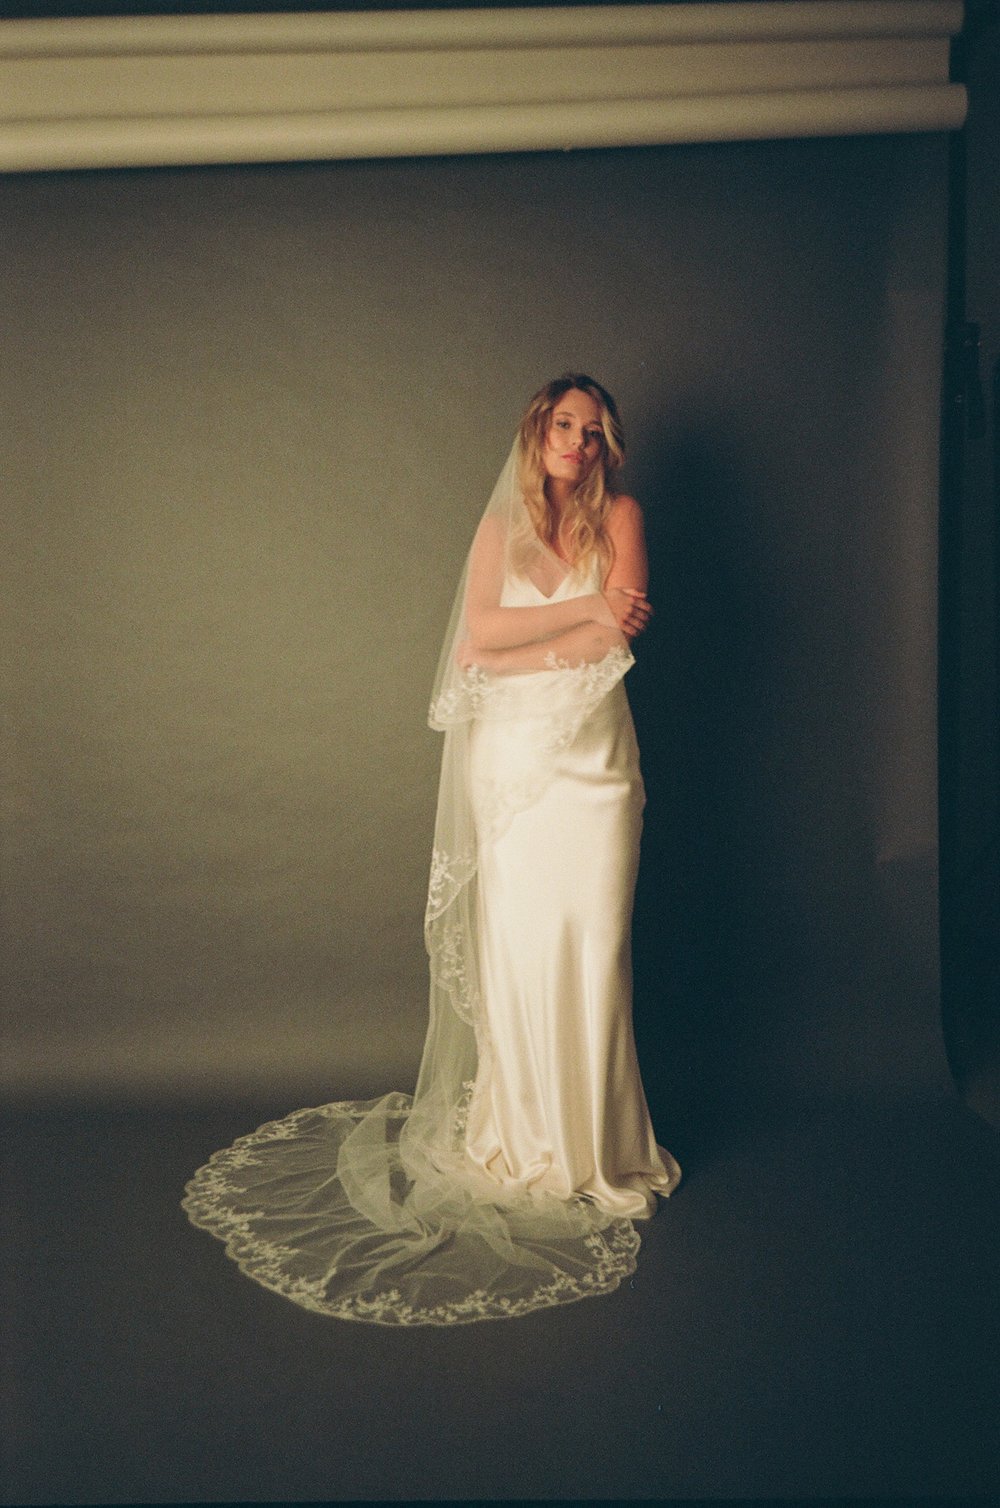 Analogue-shoot-Hollie-Cornish-photographer-Kate-Beaumont-wedding-gowns-Sheffield-22.jpg